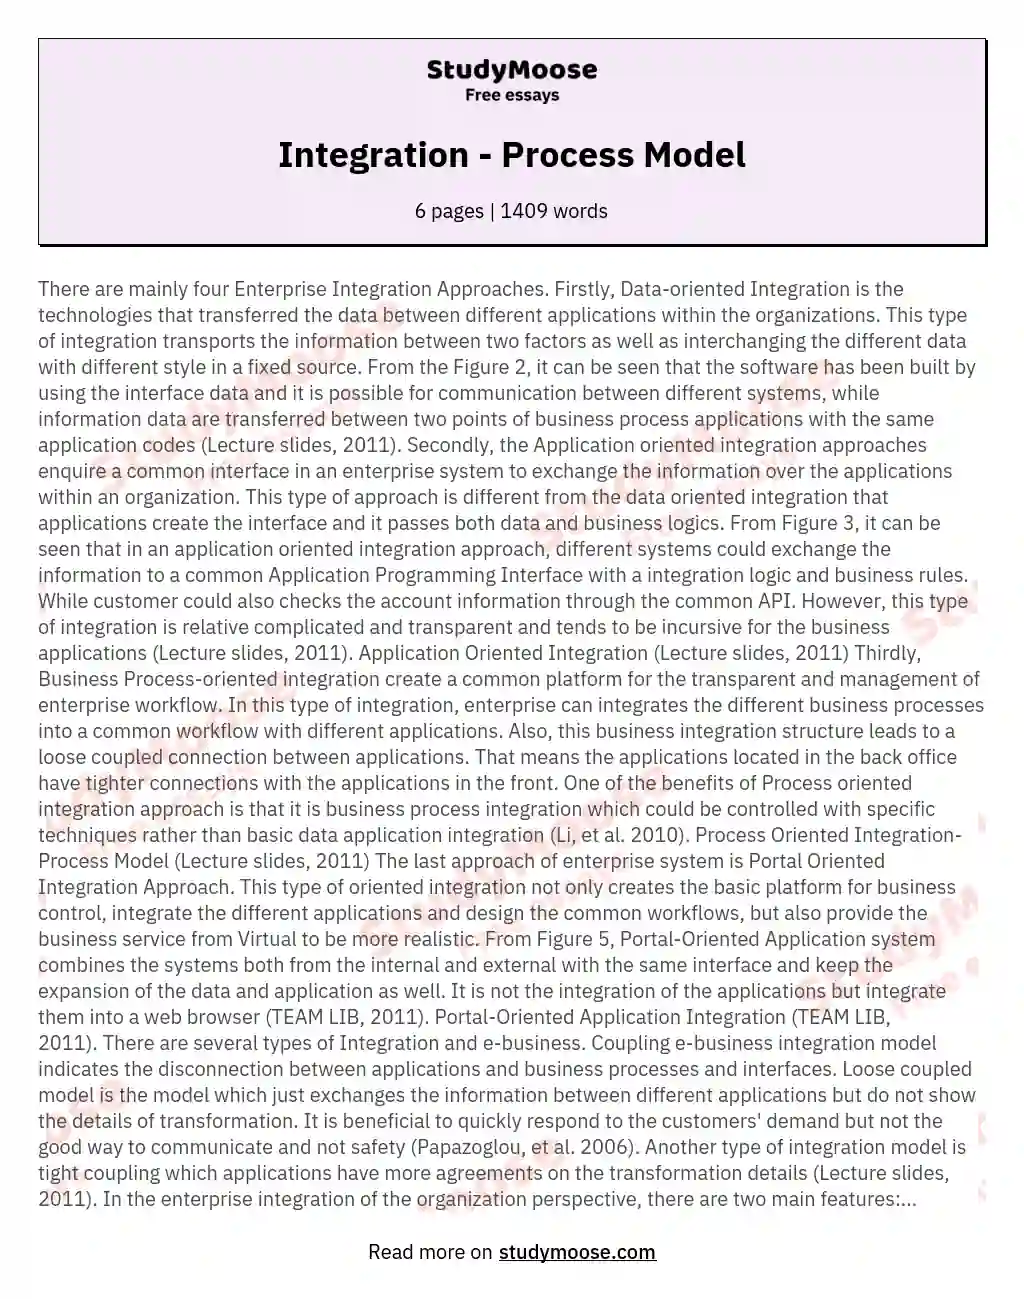 Integration - Process Model essay